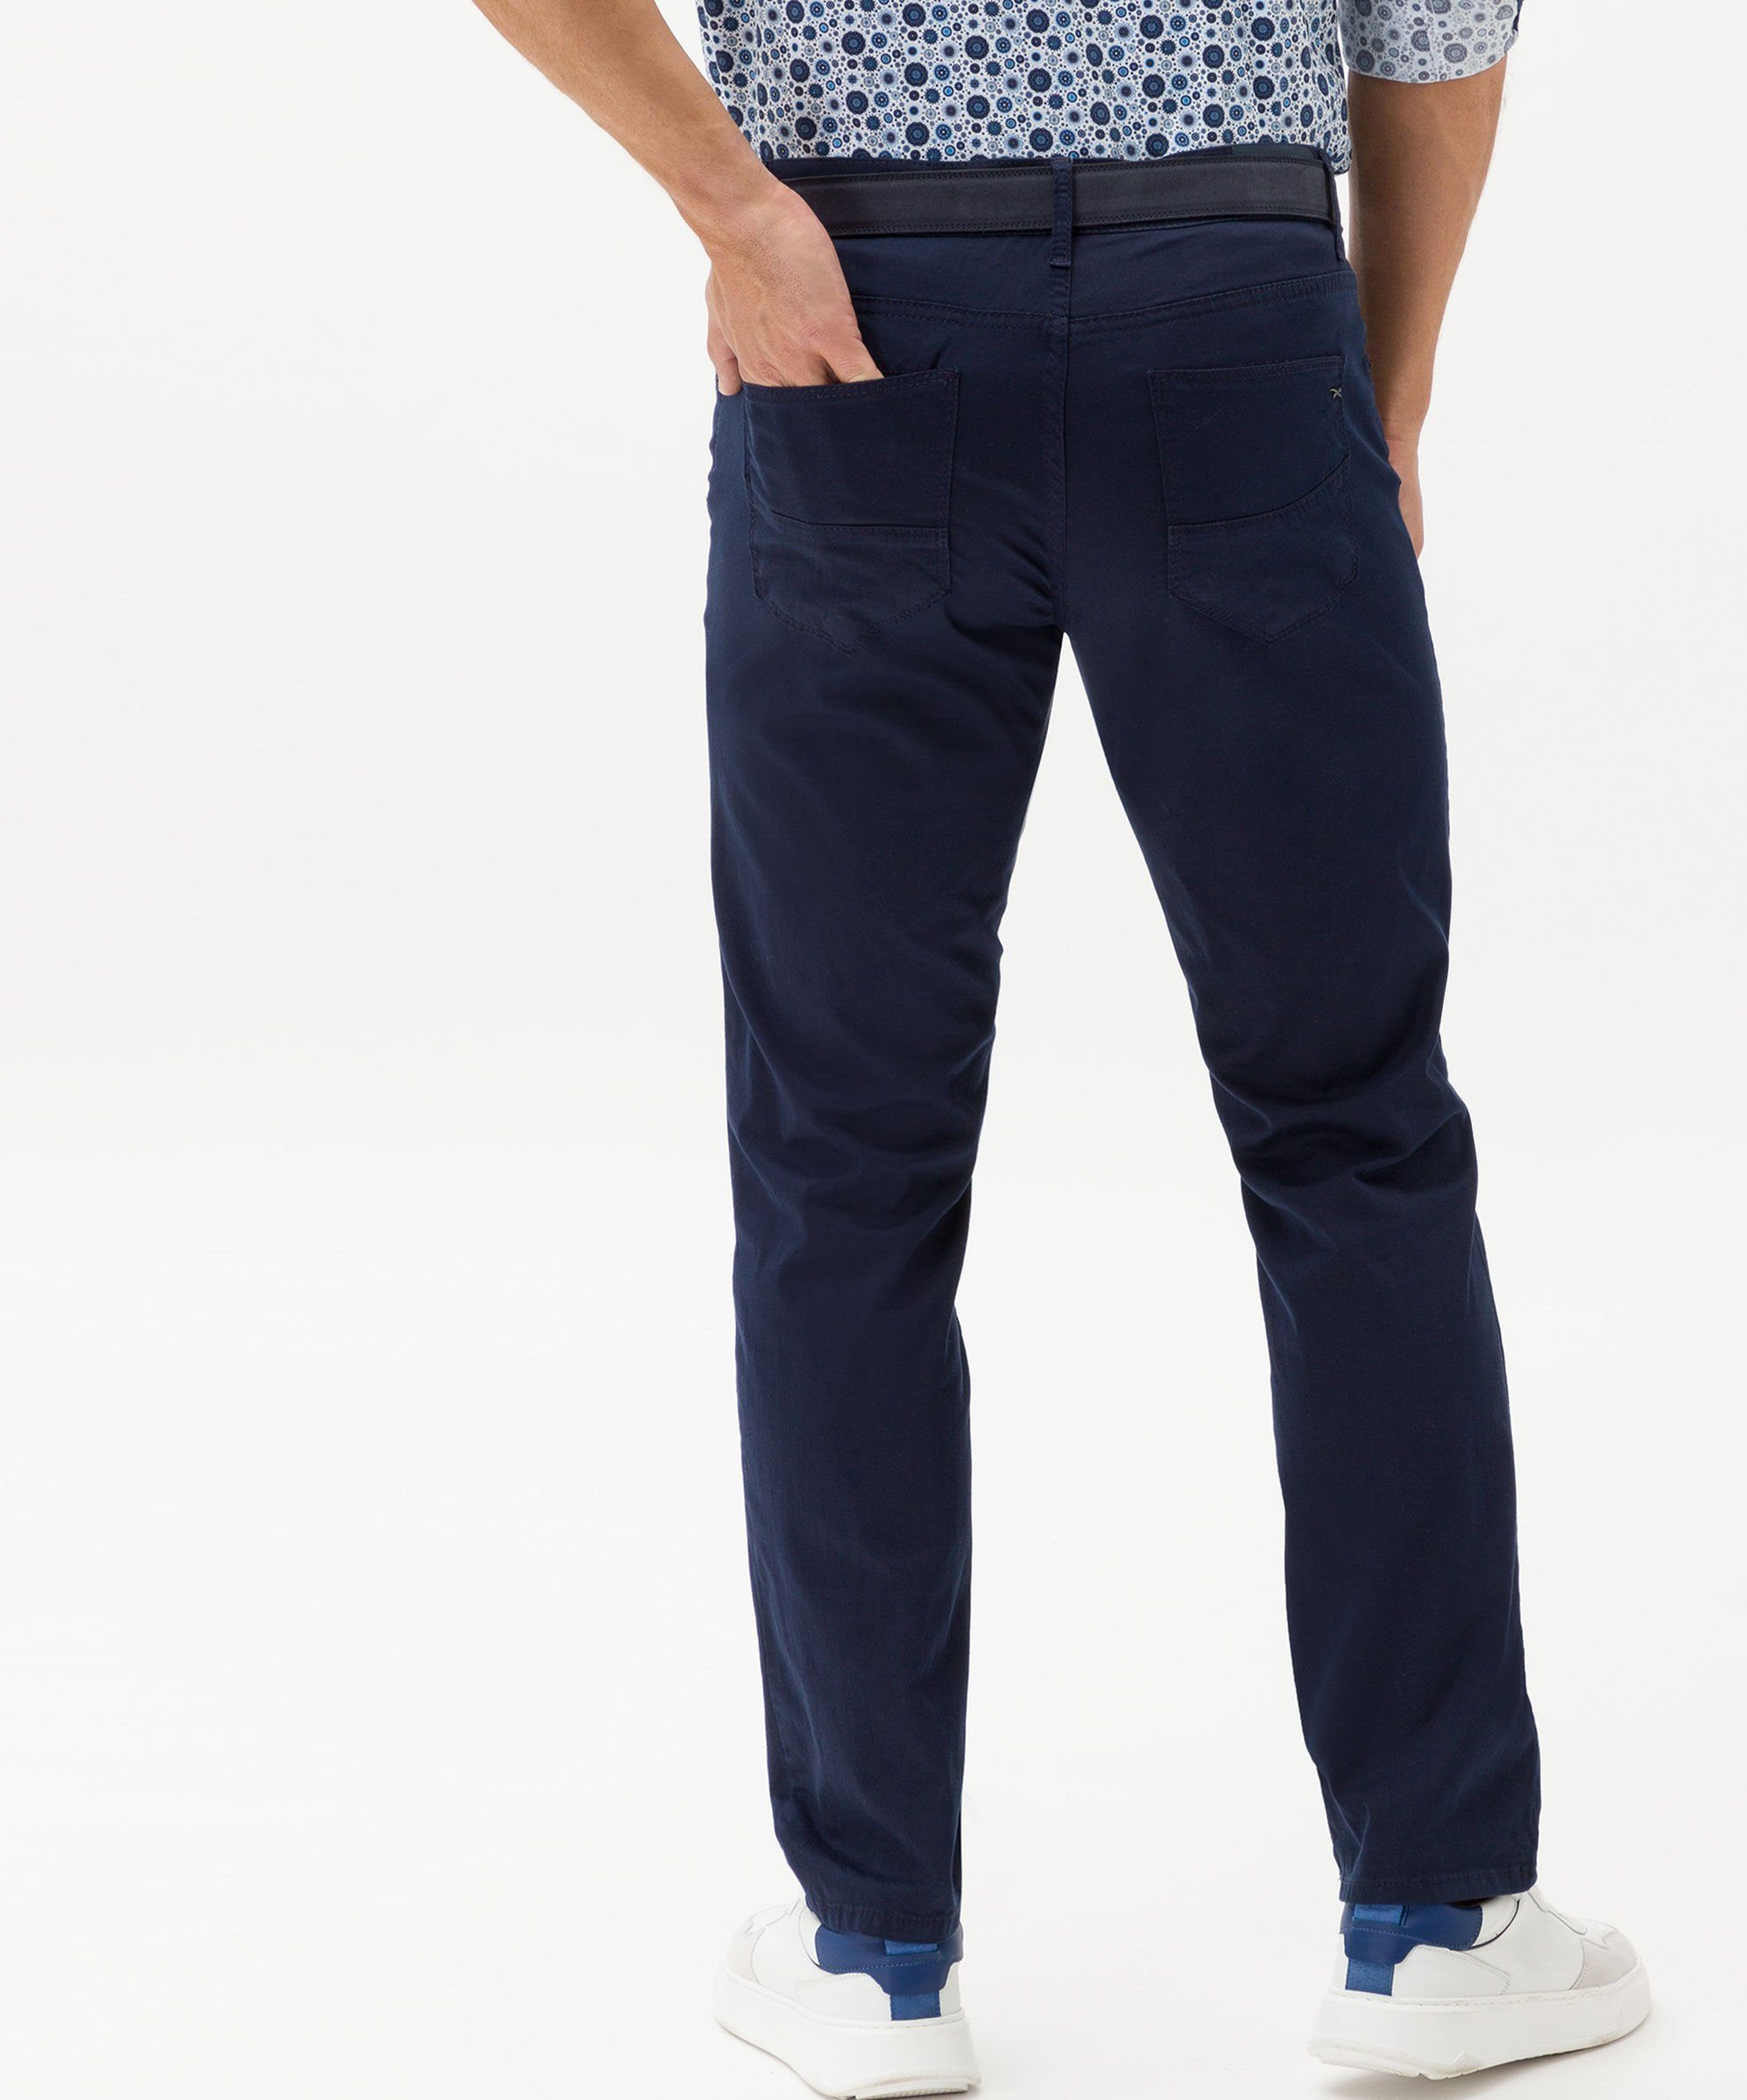 Brax Ultralight Flachgewebe superleicht Baumwoll-Stretch, sea 5-Pocket-Jeans Cadiz